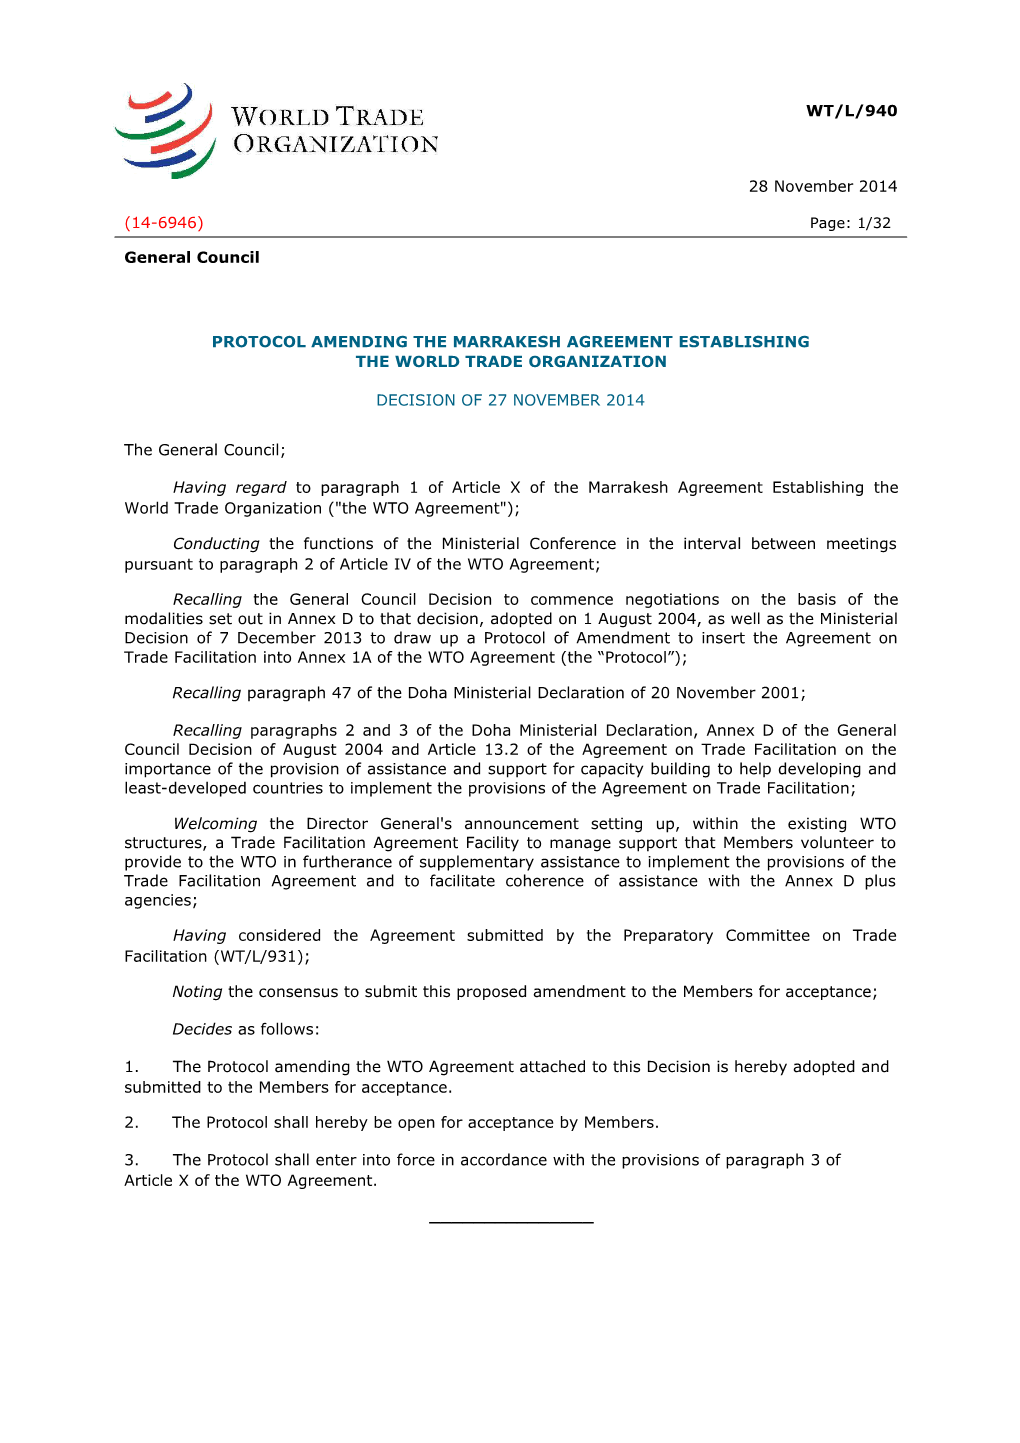 Protocol Amending the Marrakesh Agreement Establishing